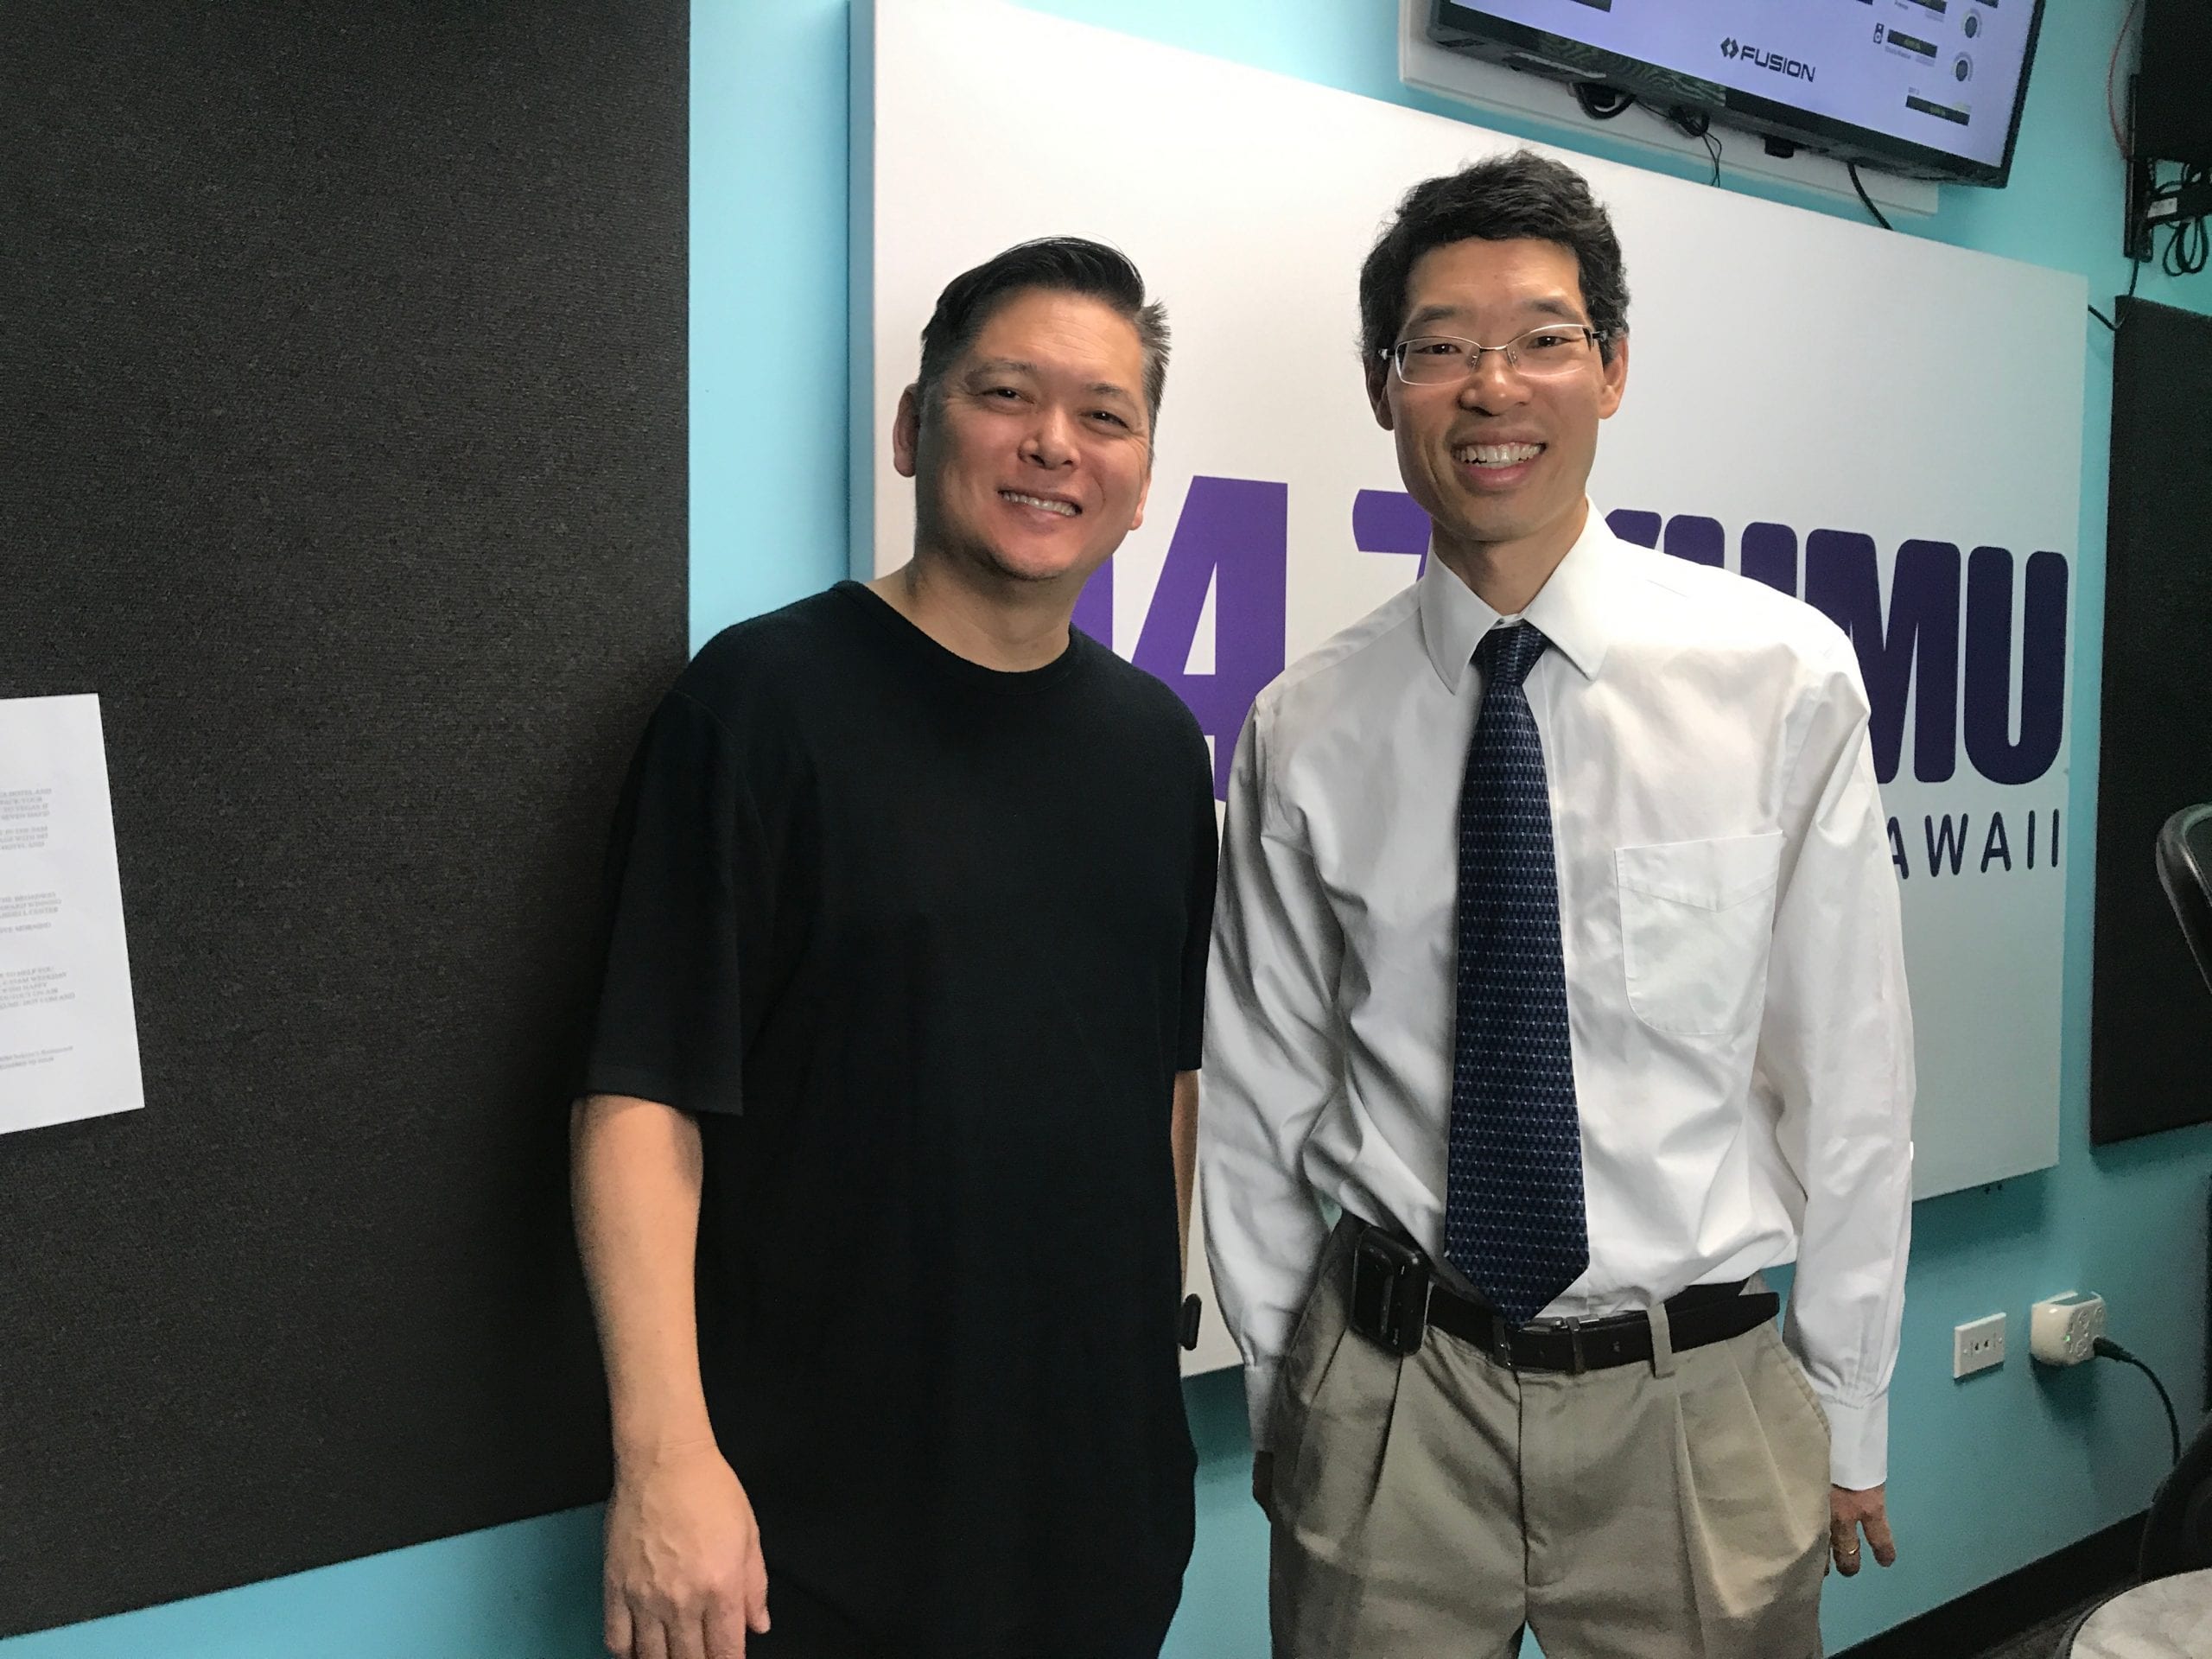 Hawaii Matters Host Devon Nekoba with Dr. Stephen Chang, Interventional Cardiologist with Kaiser Permanente